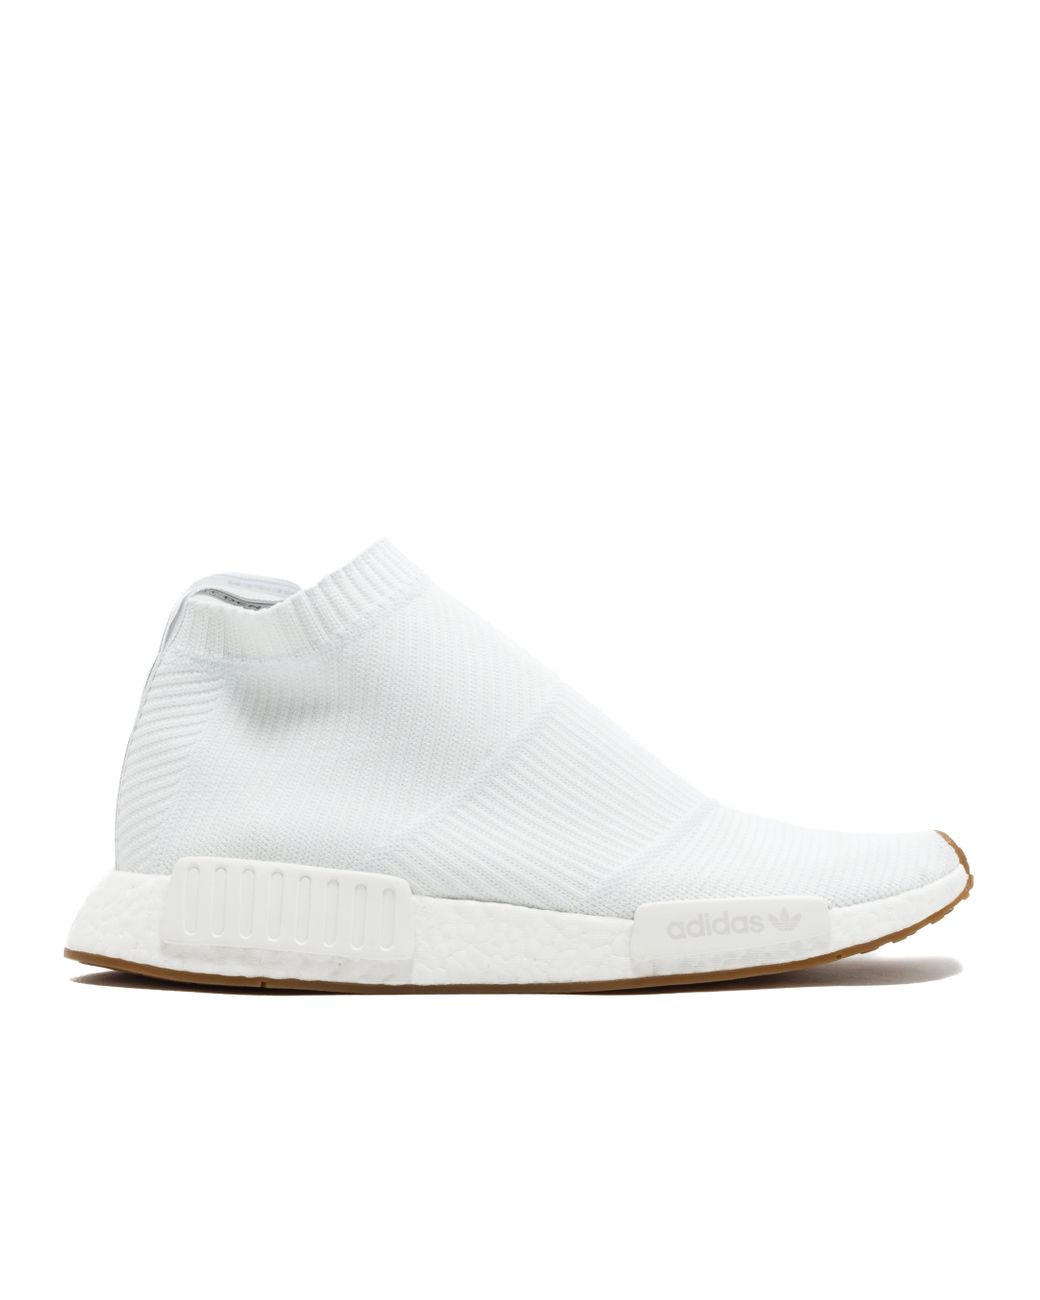 adidas nmd cs1 white gum online -